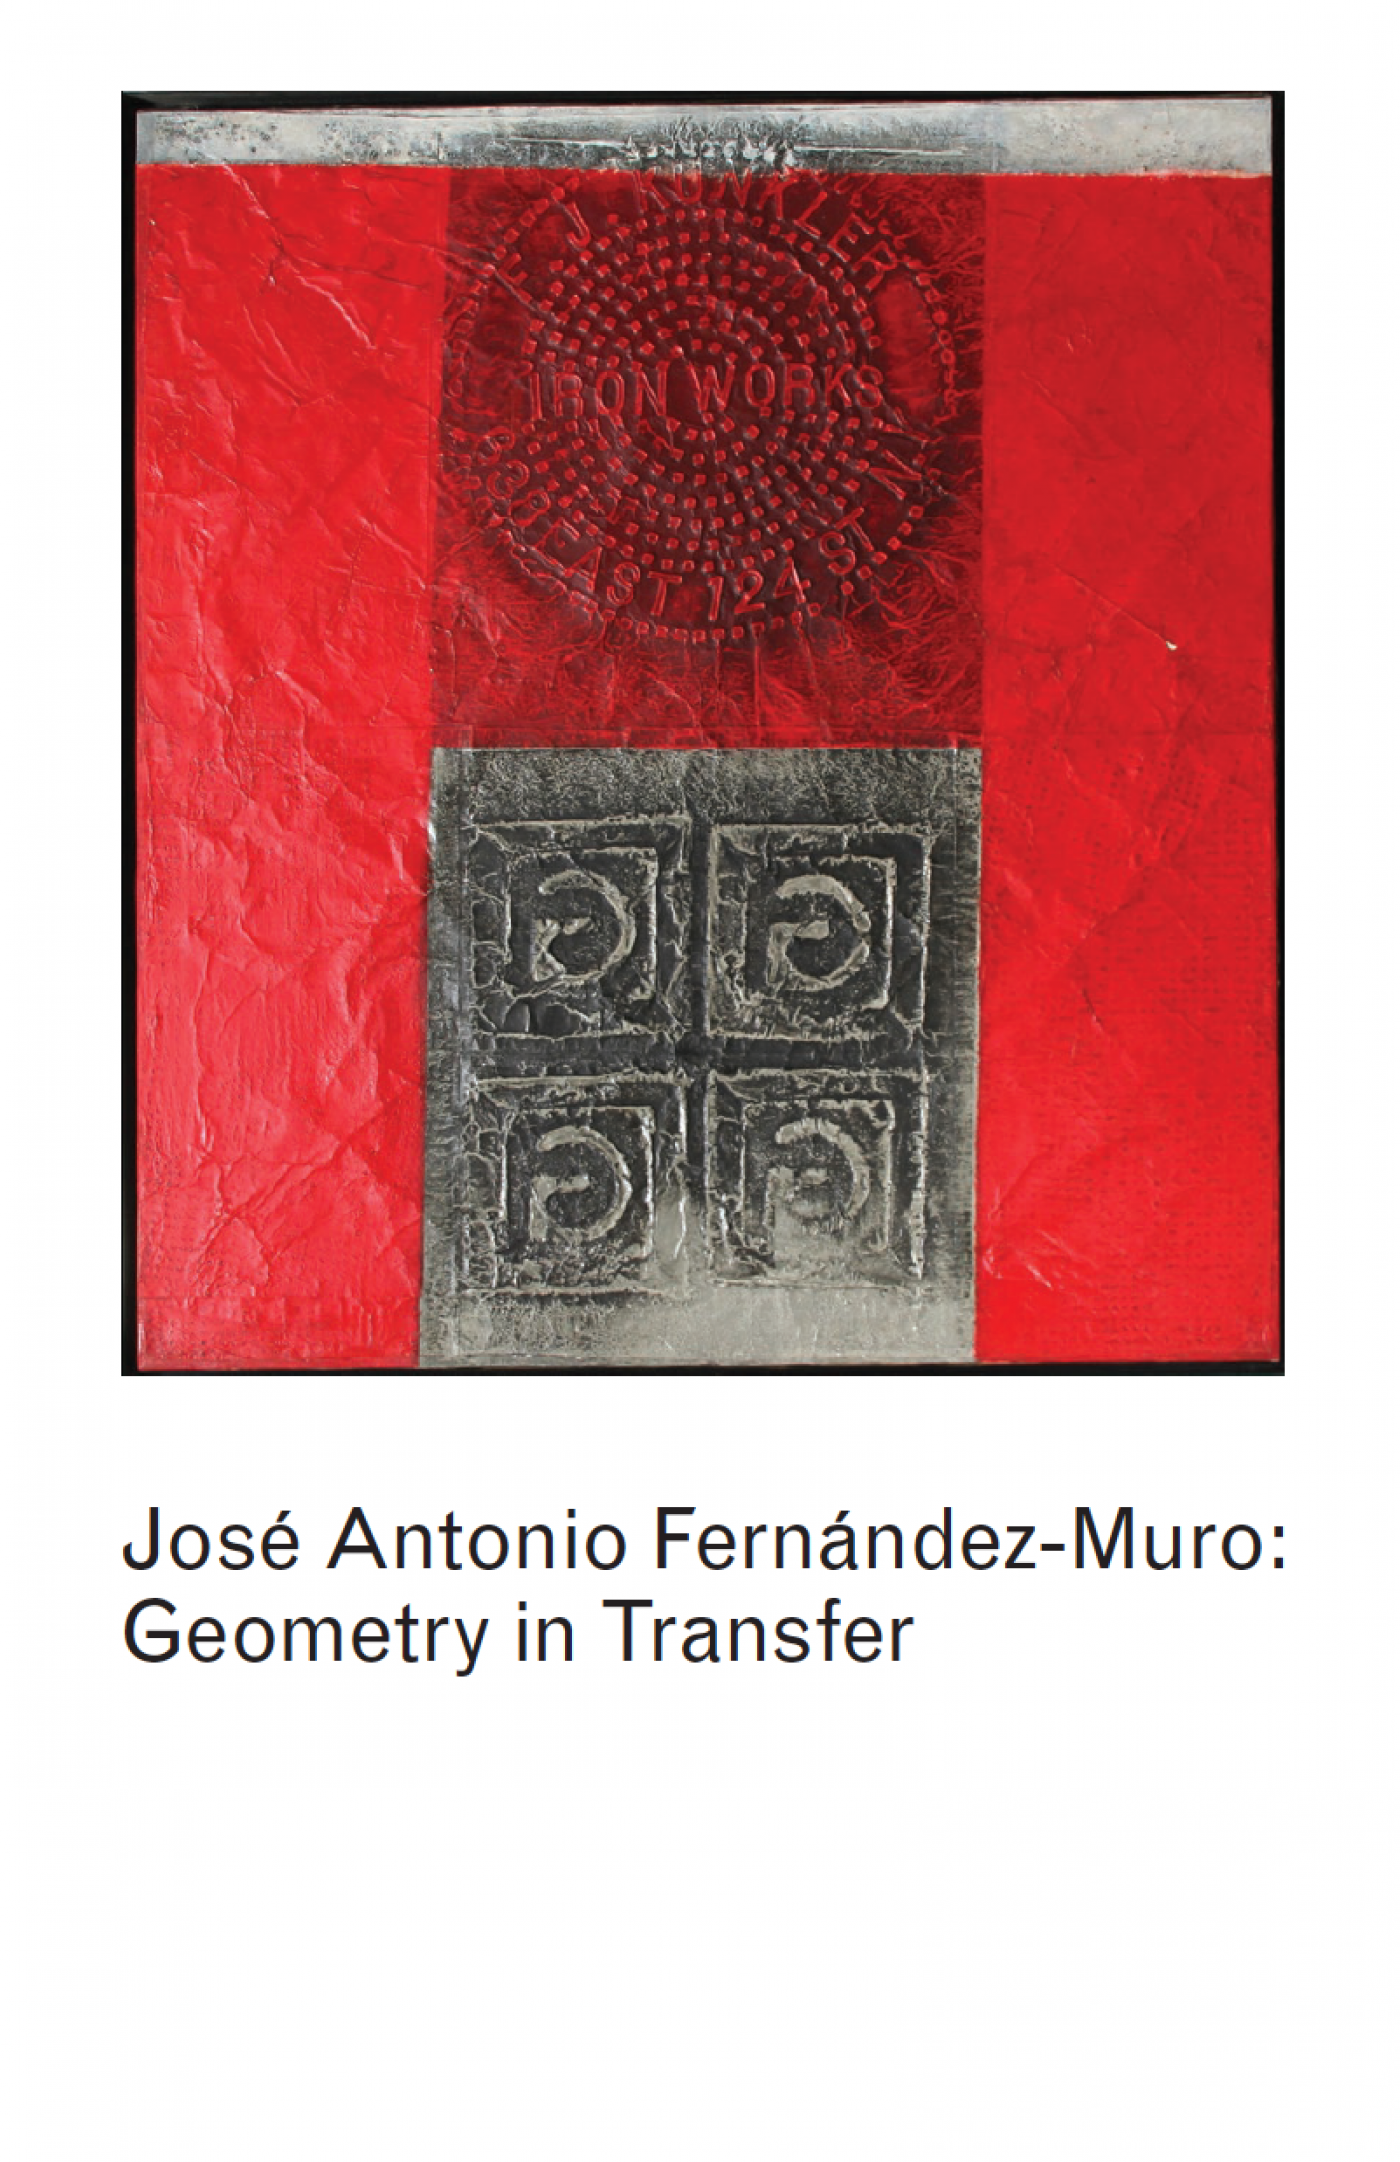 Exhibition poster for José Antonio Fernández Muro: Geometry in Transfer featuring an aluminum foil work.